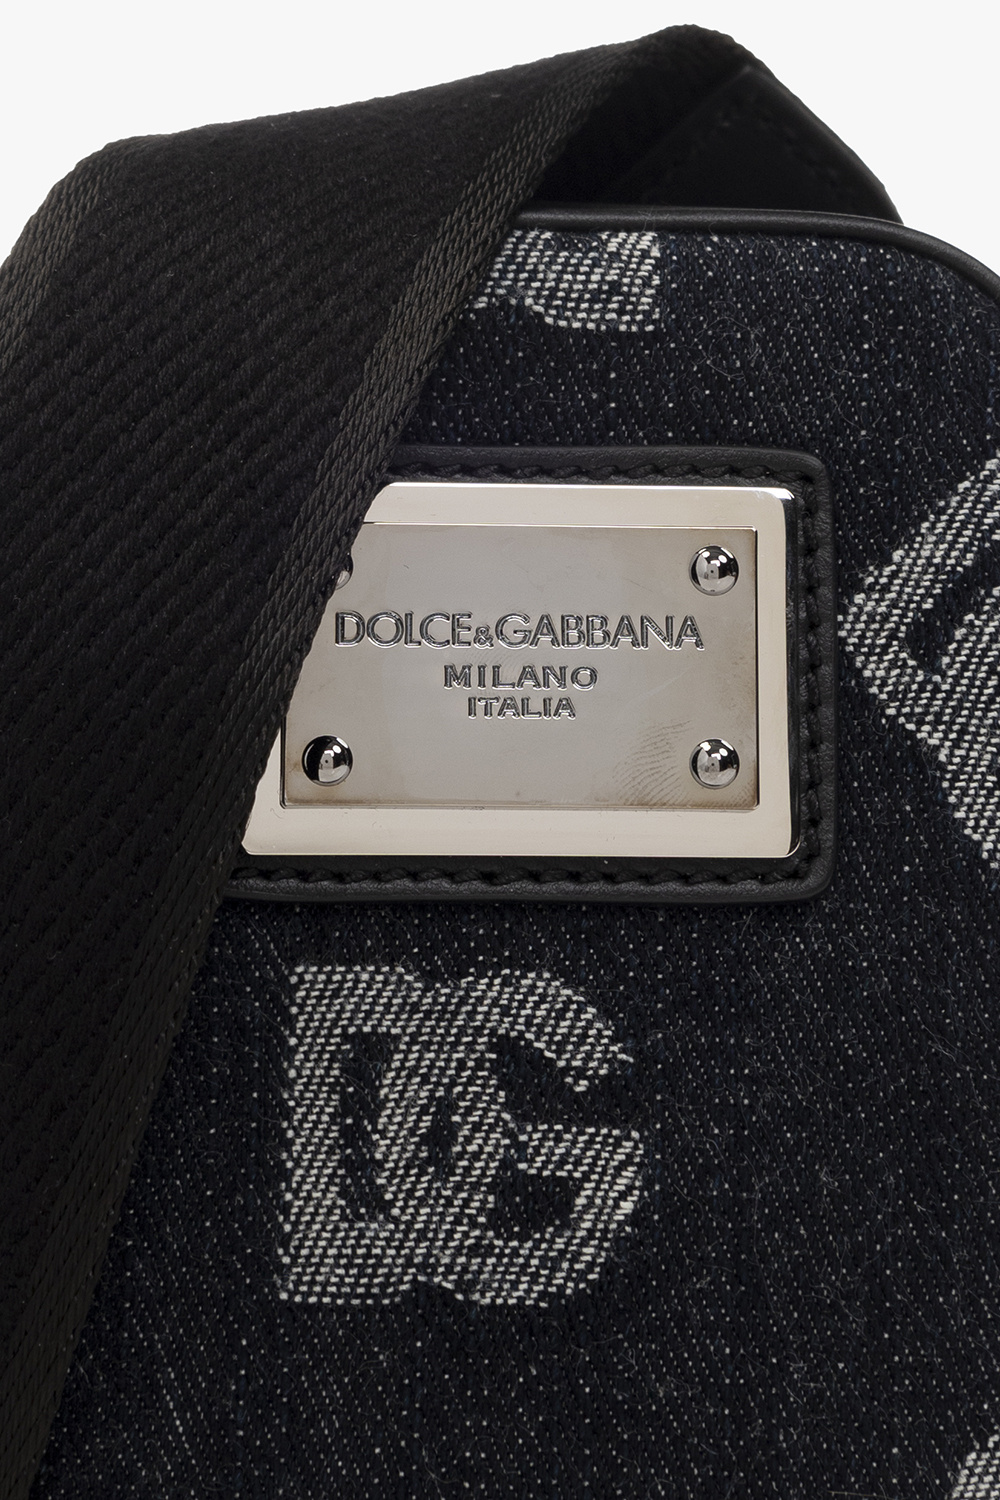 dolce gabbana crown logo t shirt item Dolce & Gabbana classic derby shoes Black